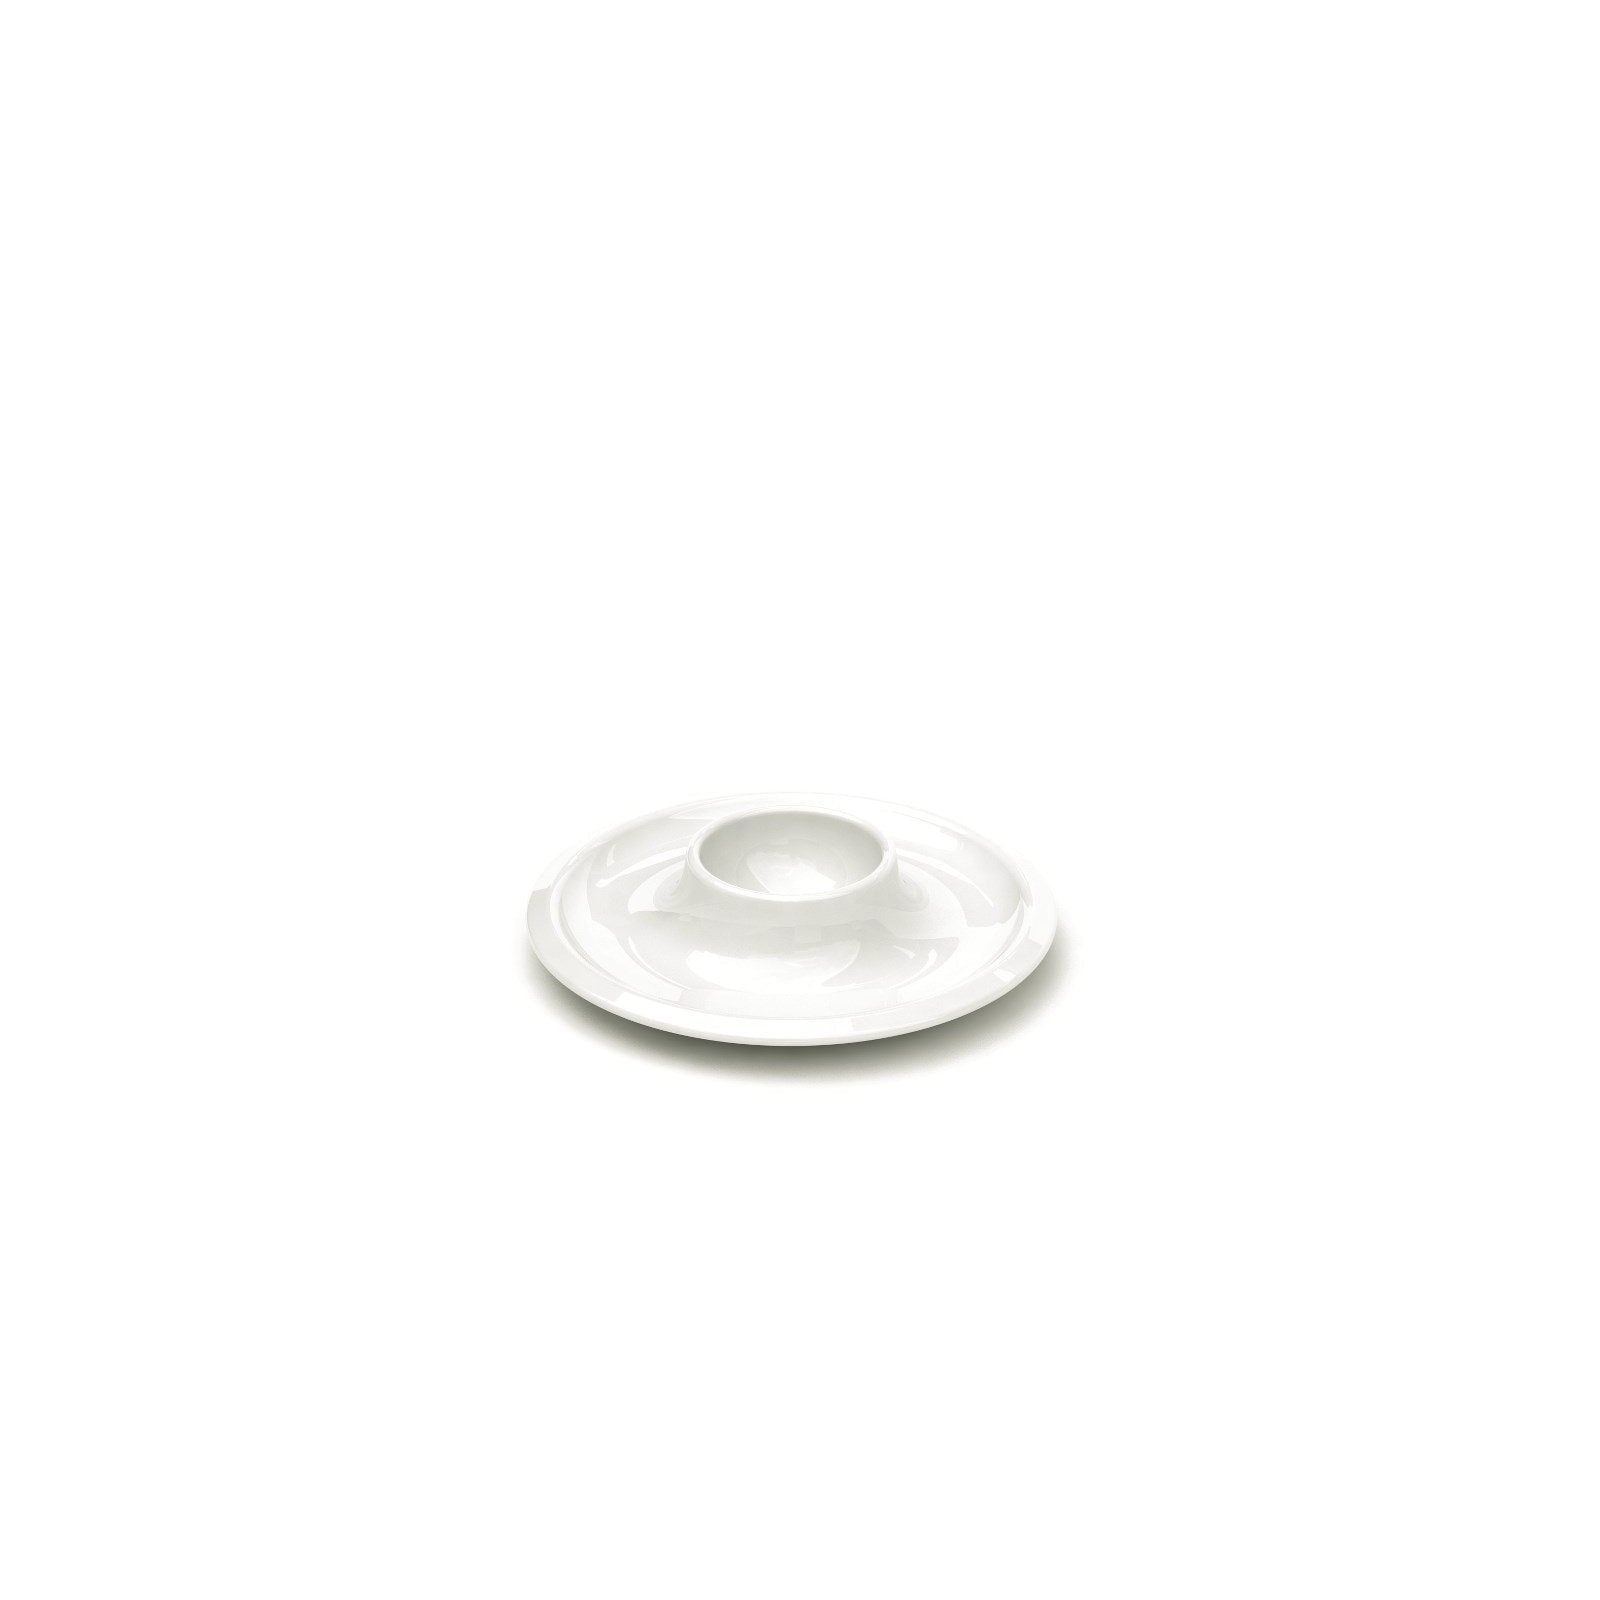 Iittala Raami Egg Cup White 2pcs, 12 cm